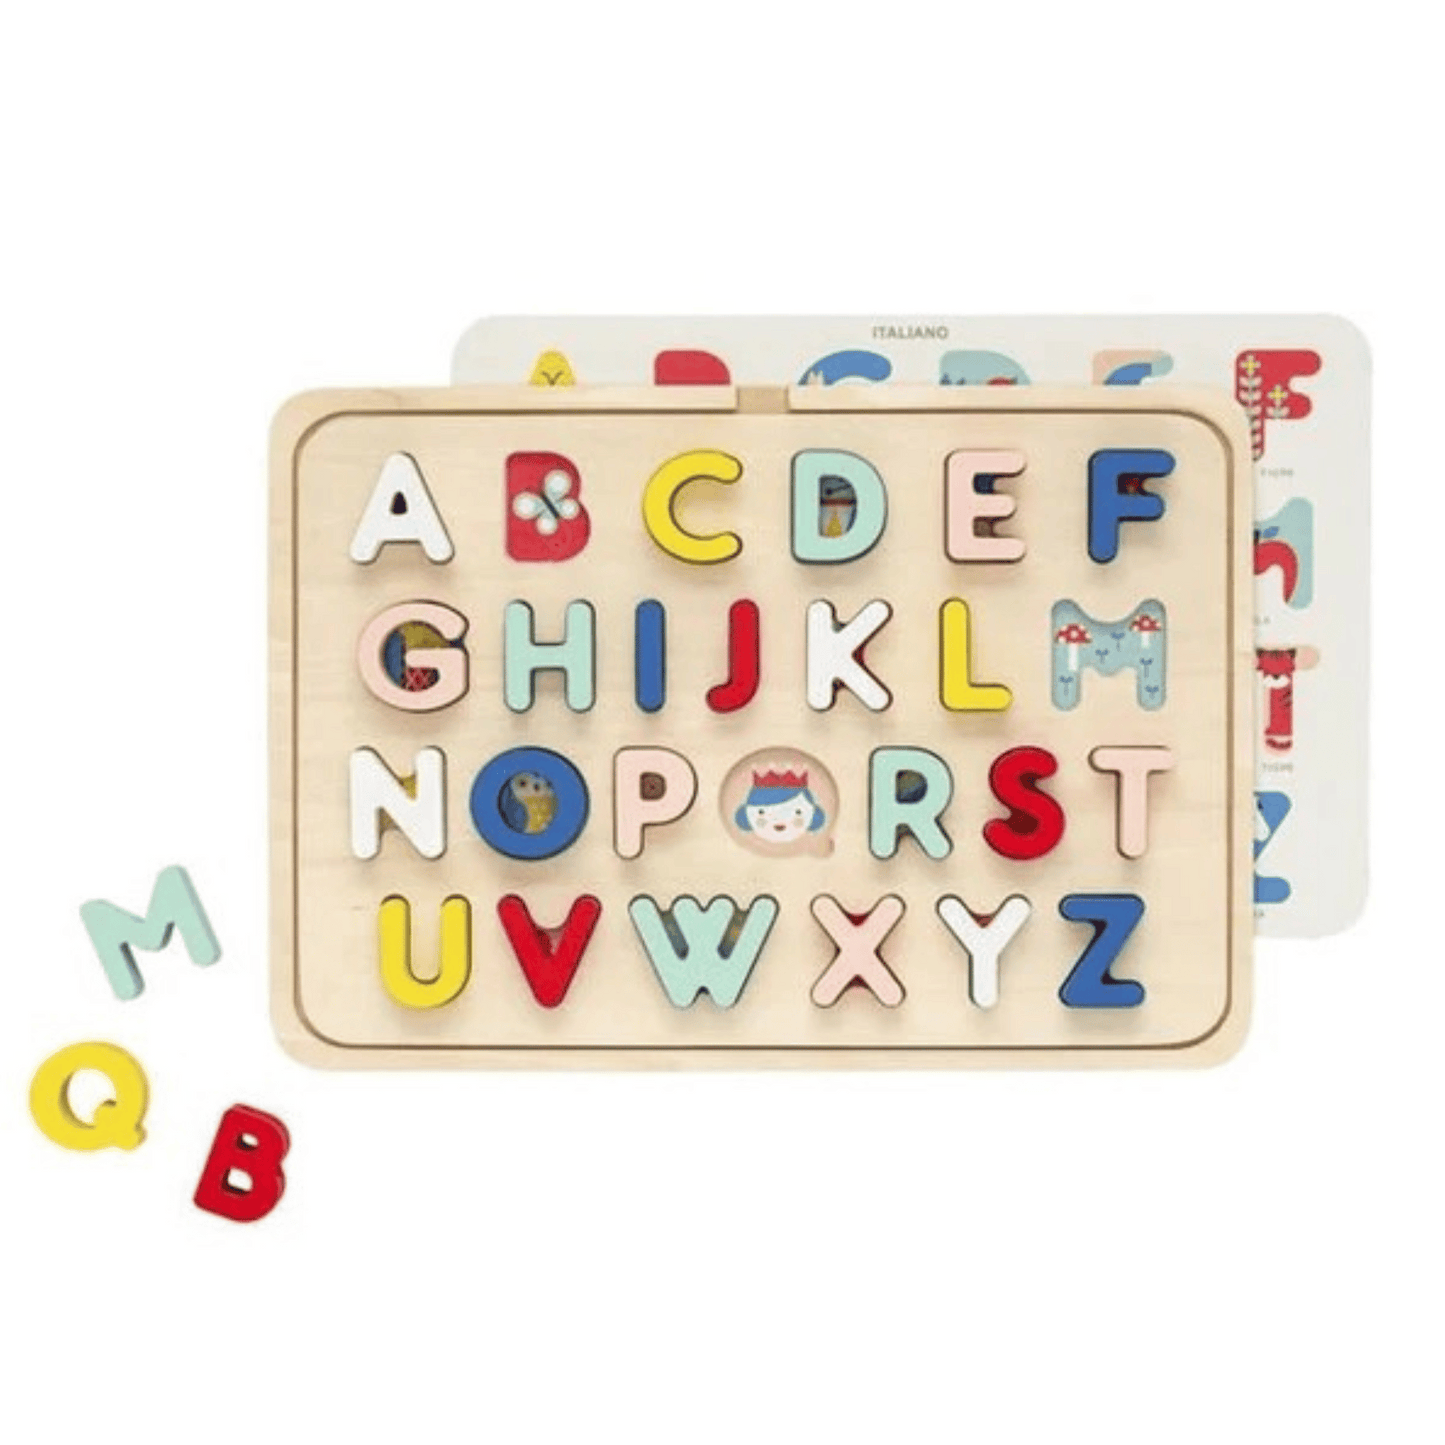 Multi-Language Wooden Alphabet Tray Puzzle